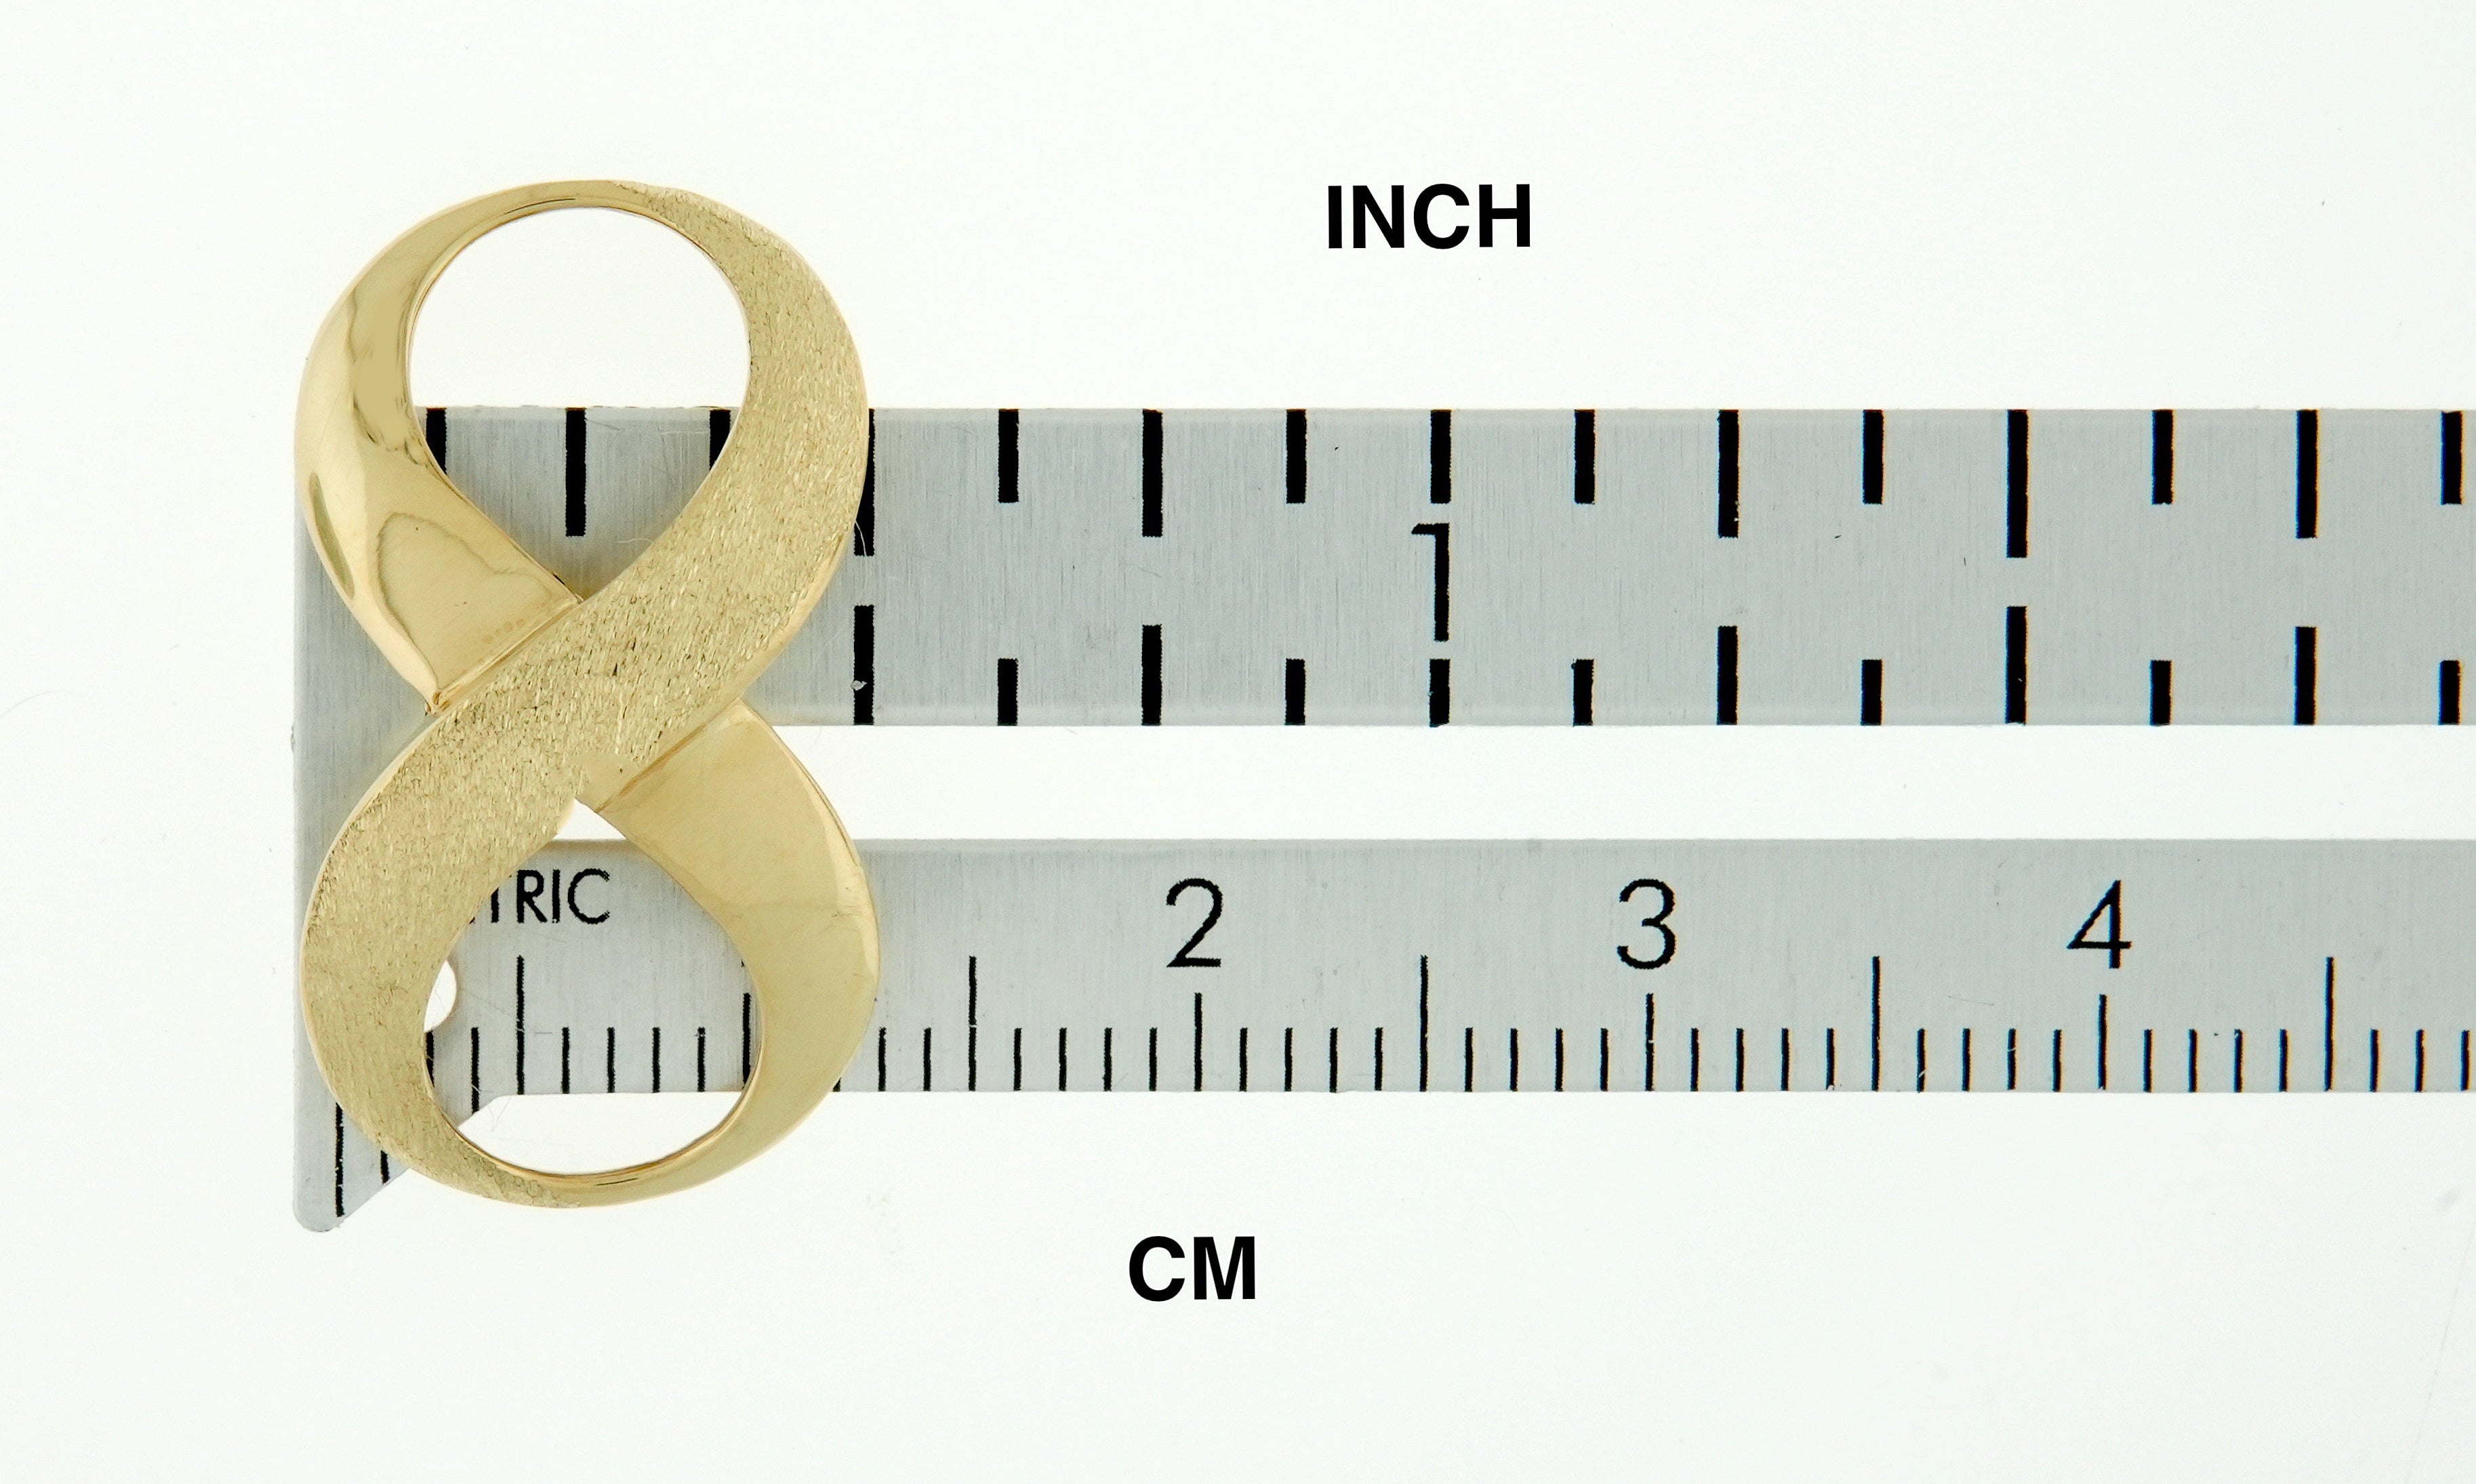 14k Yellow Gold Infinity Symbol Chain Slide Pendant Charm